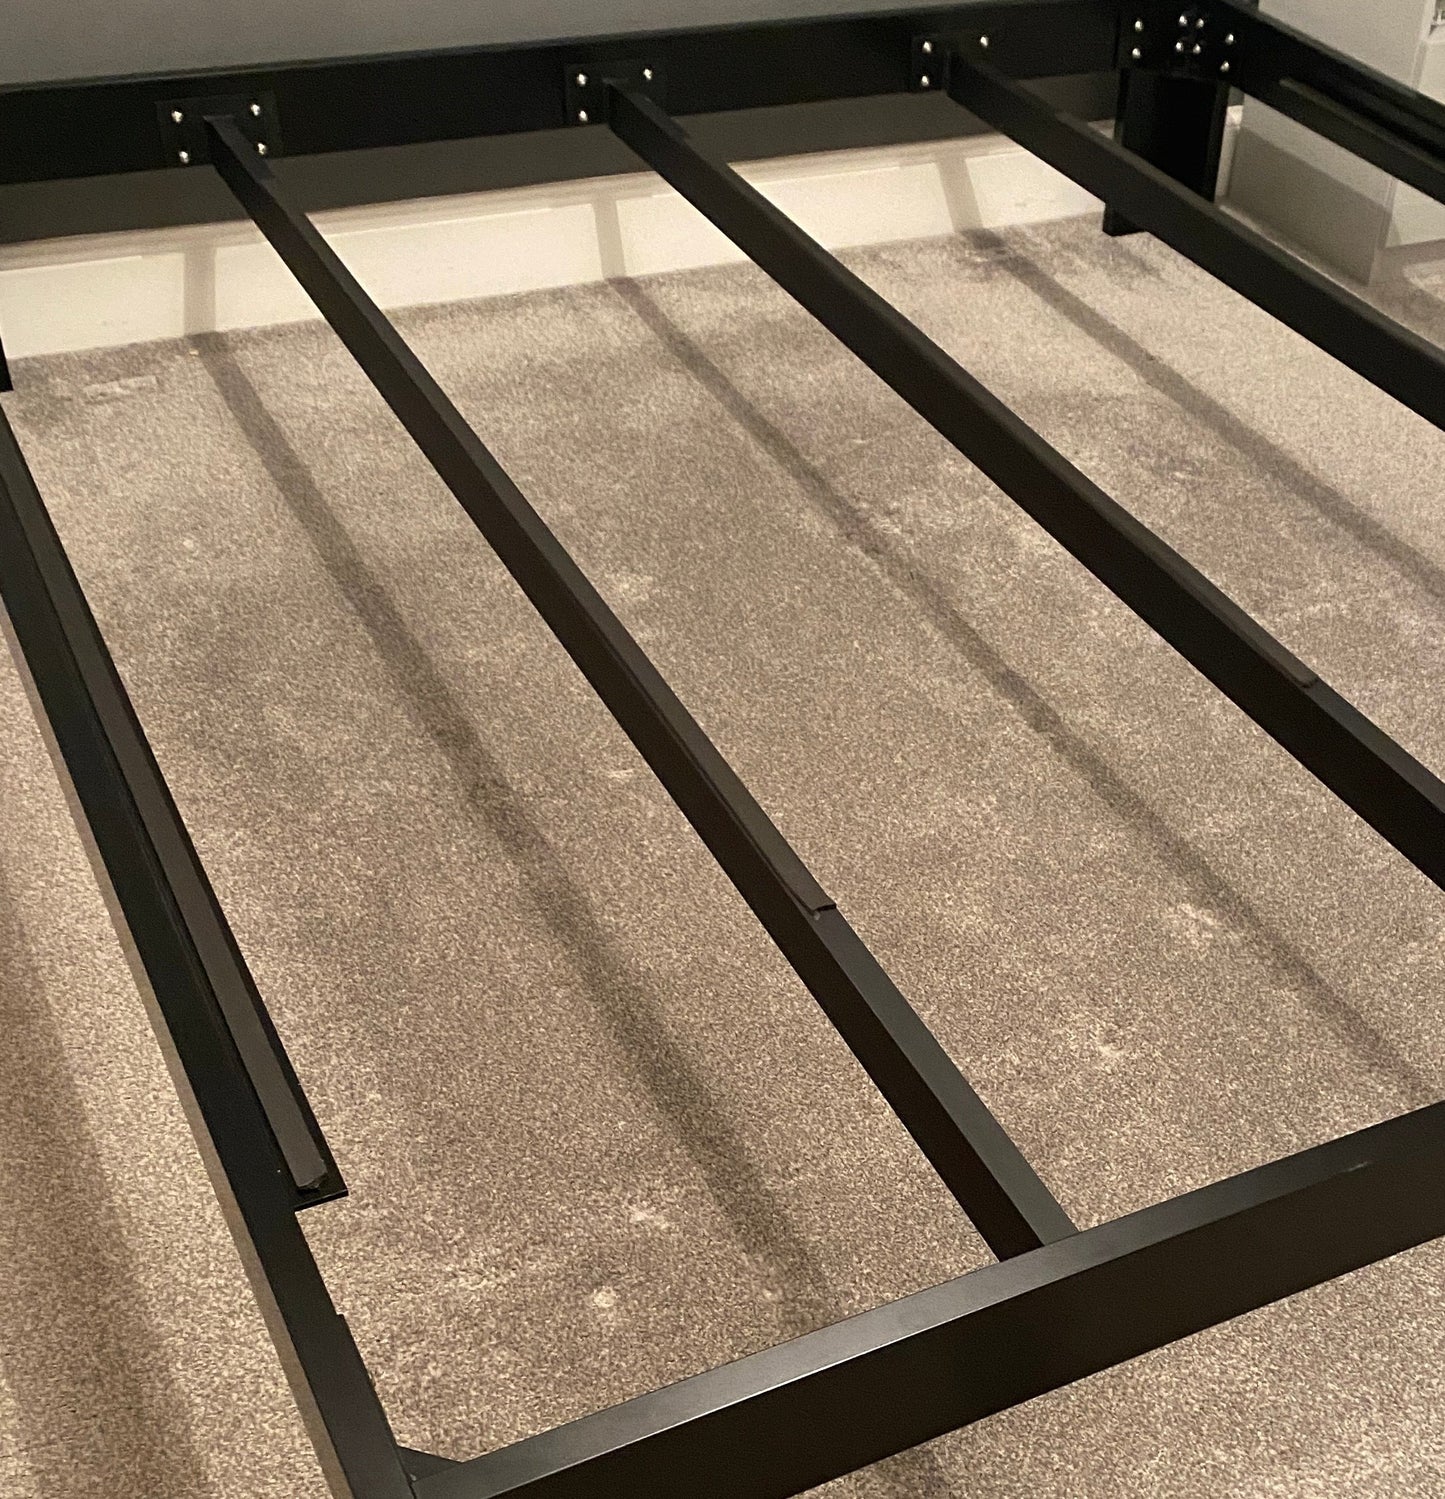 Aluminium Metal Super King Bed Frame - RESS Furniture Ltd. Aluminium Frames